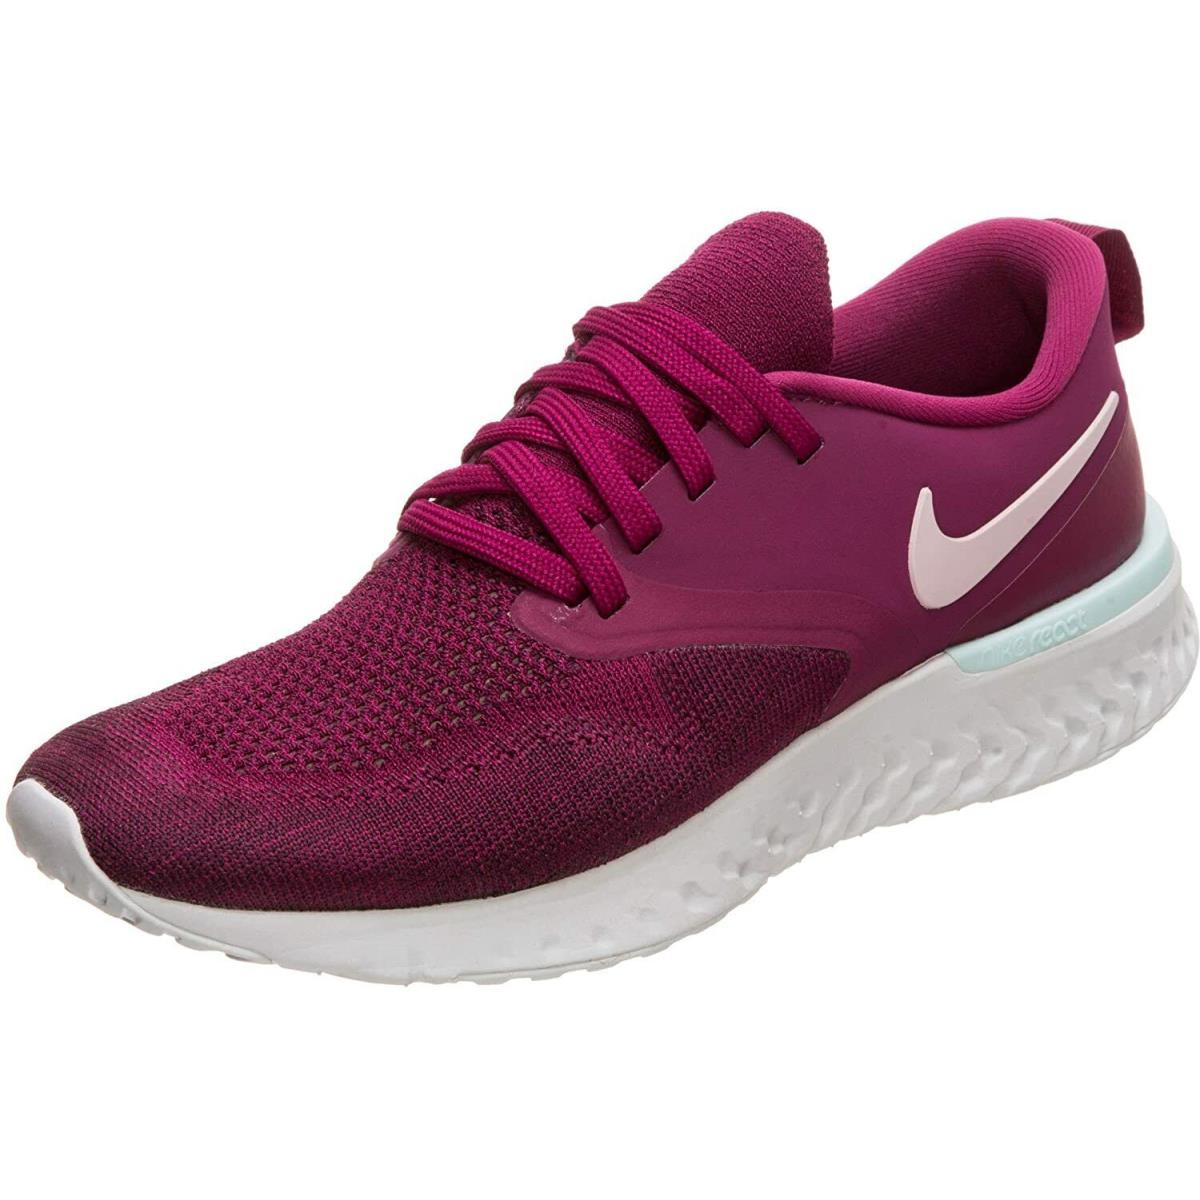 W Nike Odyssey React 2 Flyknit Womens Shoe AH1016 600 Size 6.5 - Raspberry/Red/Plum Chalk